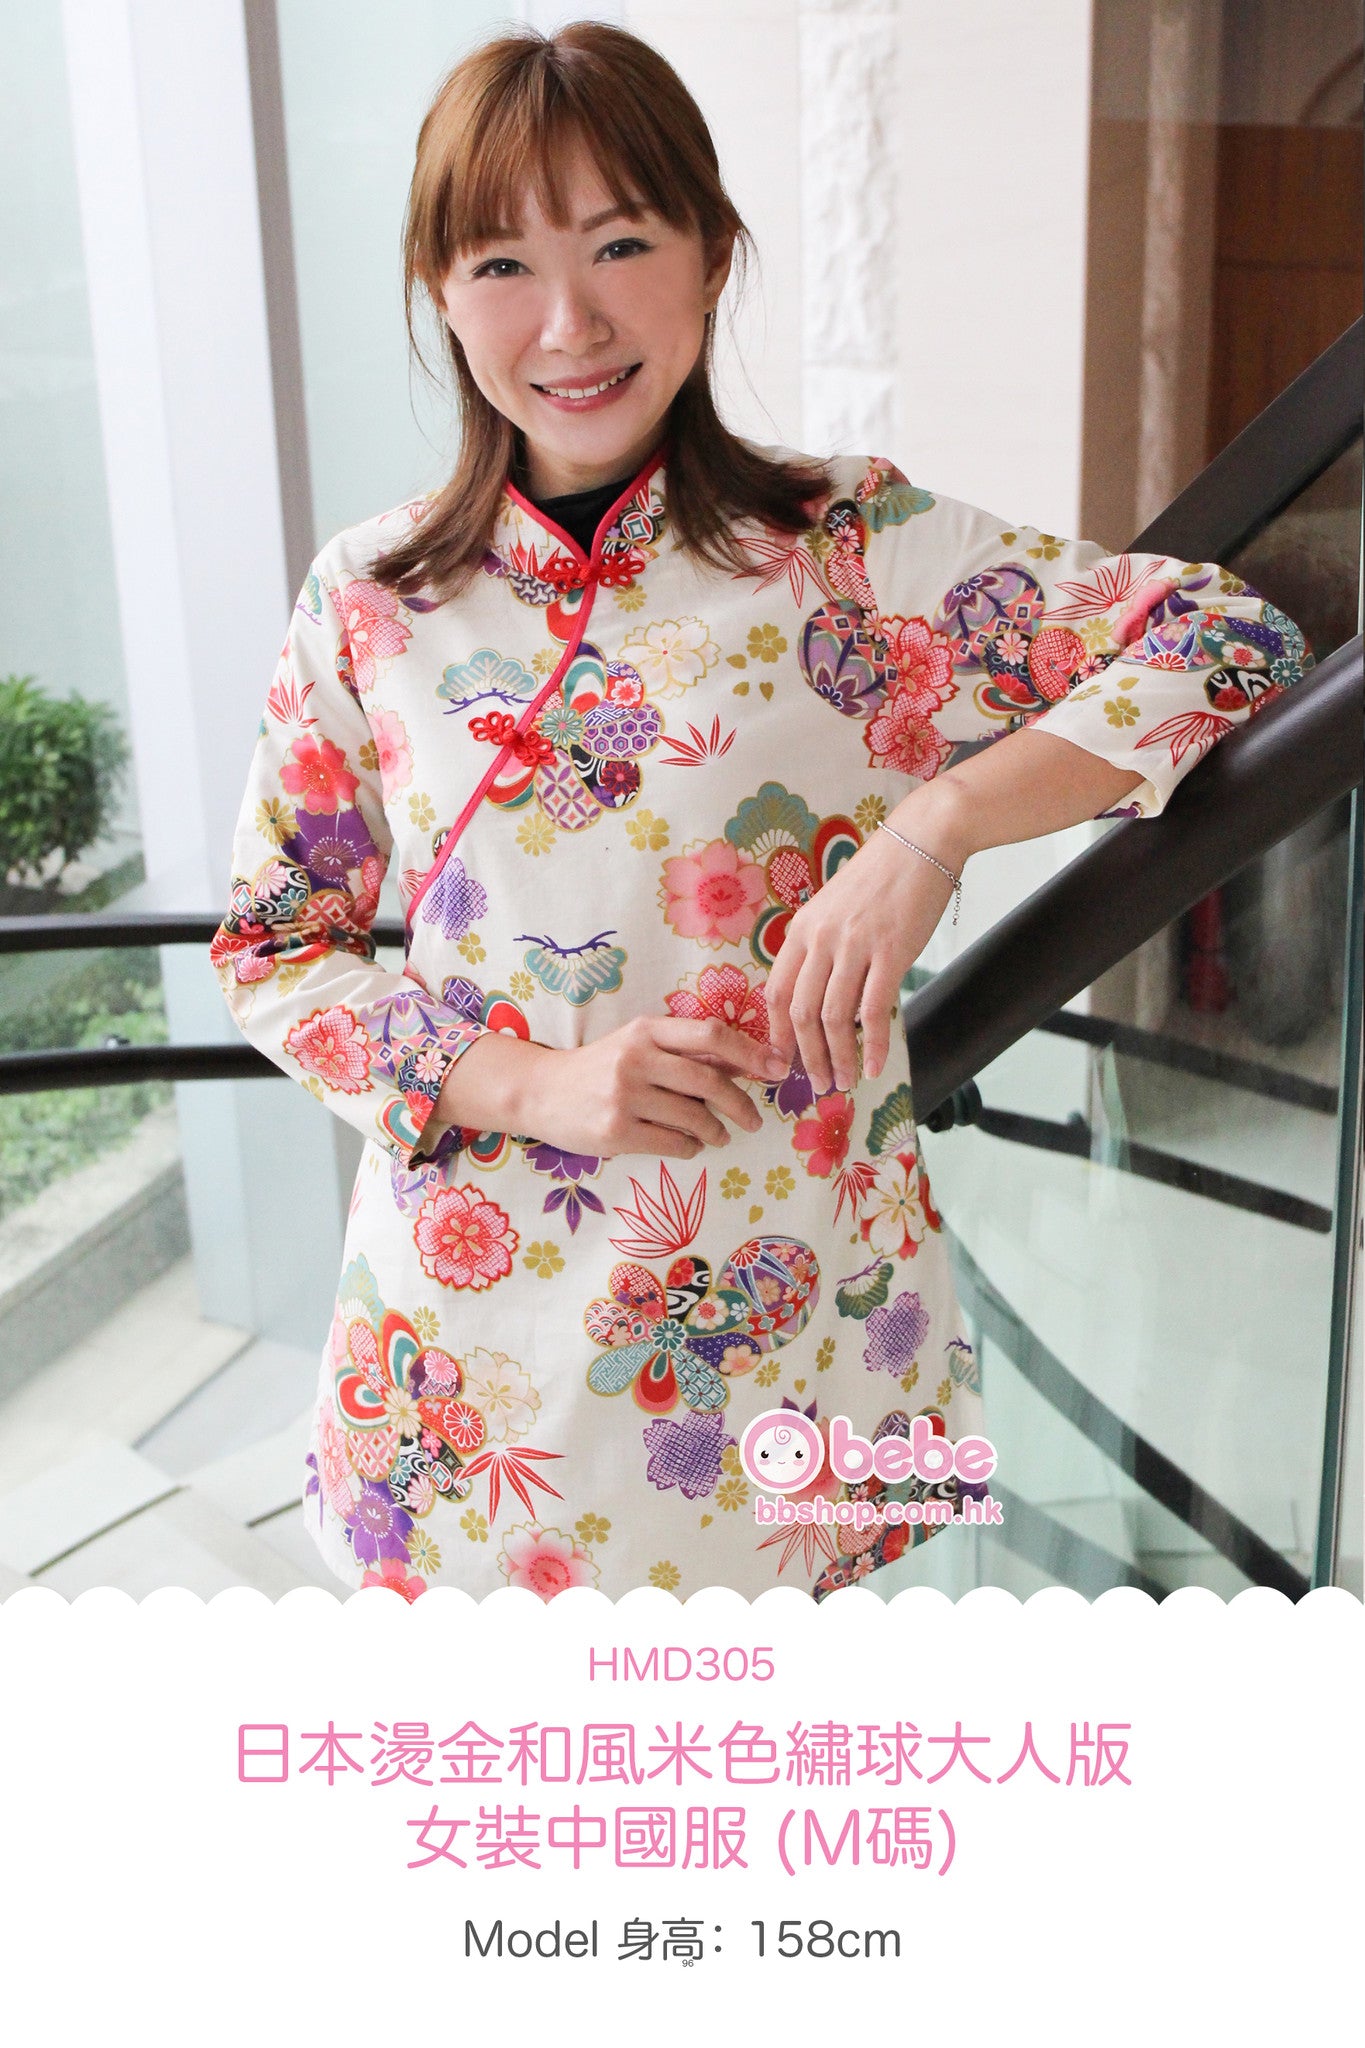 HMD302 日本燙金和風米色繡球成人女裝中國服 - 旗袍款